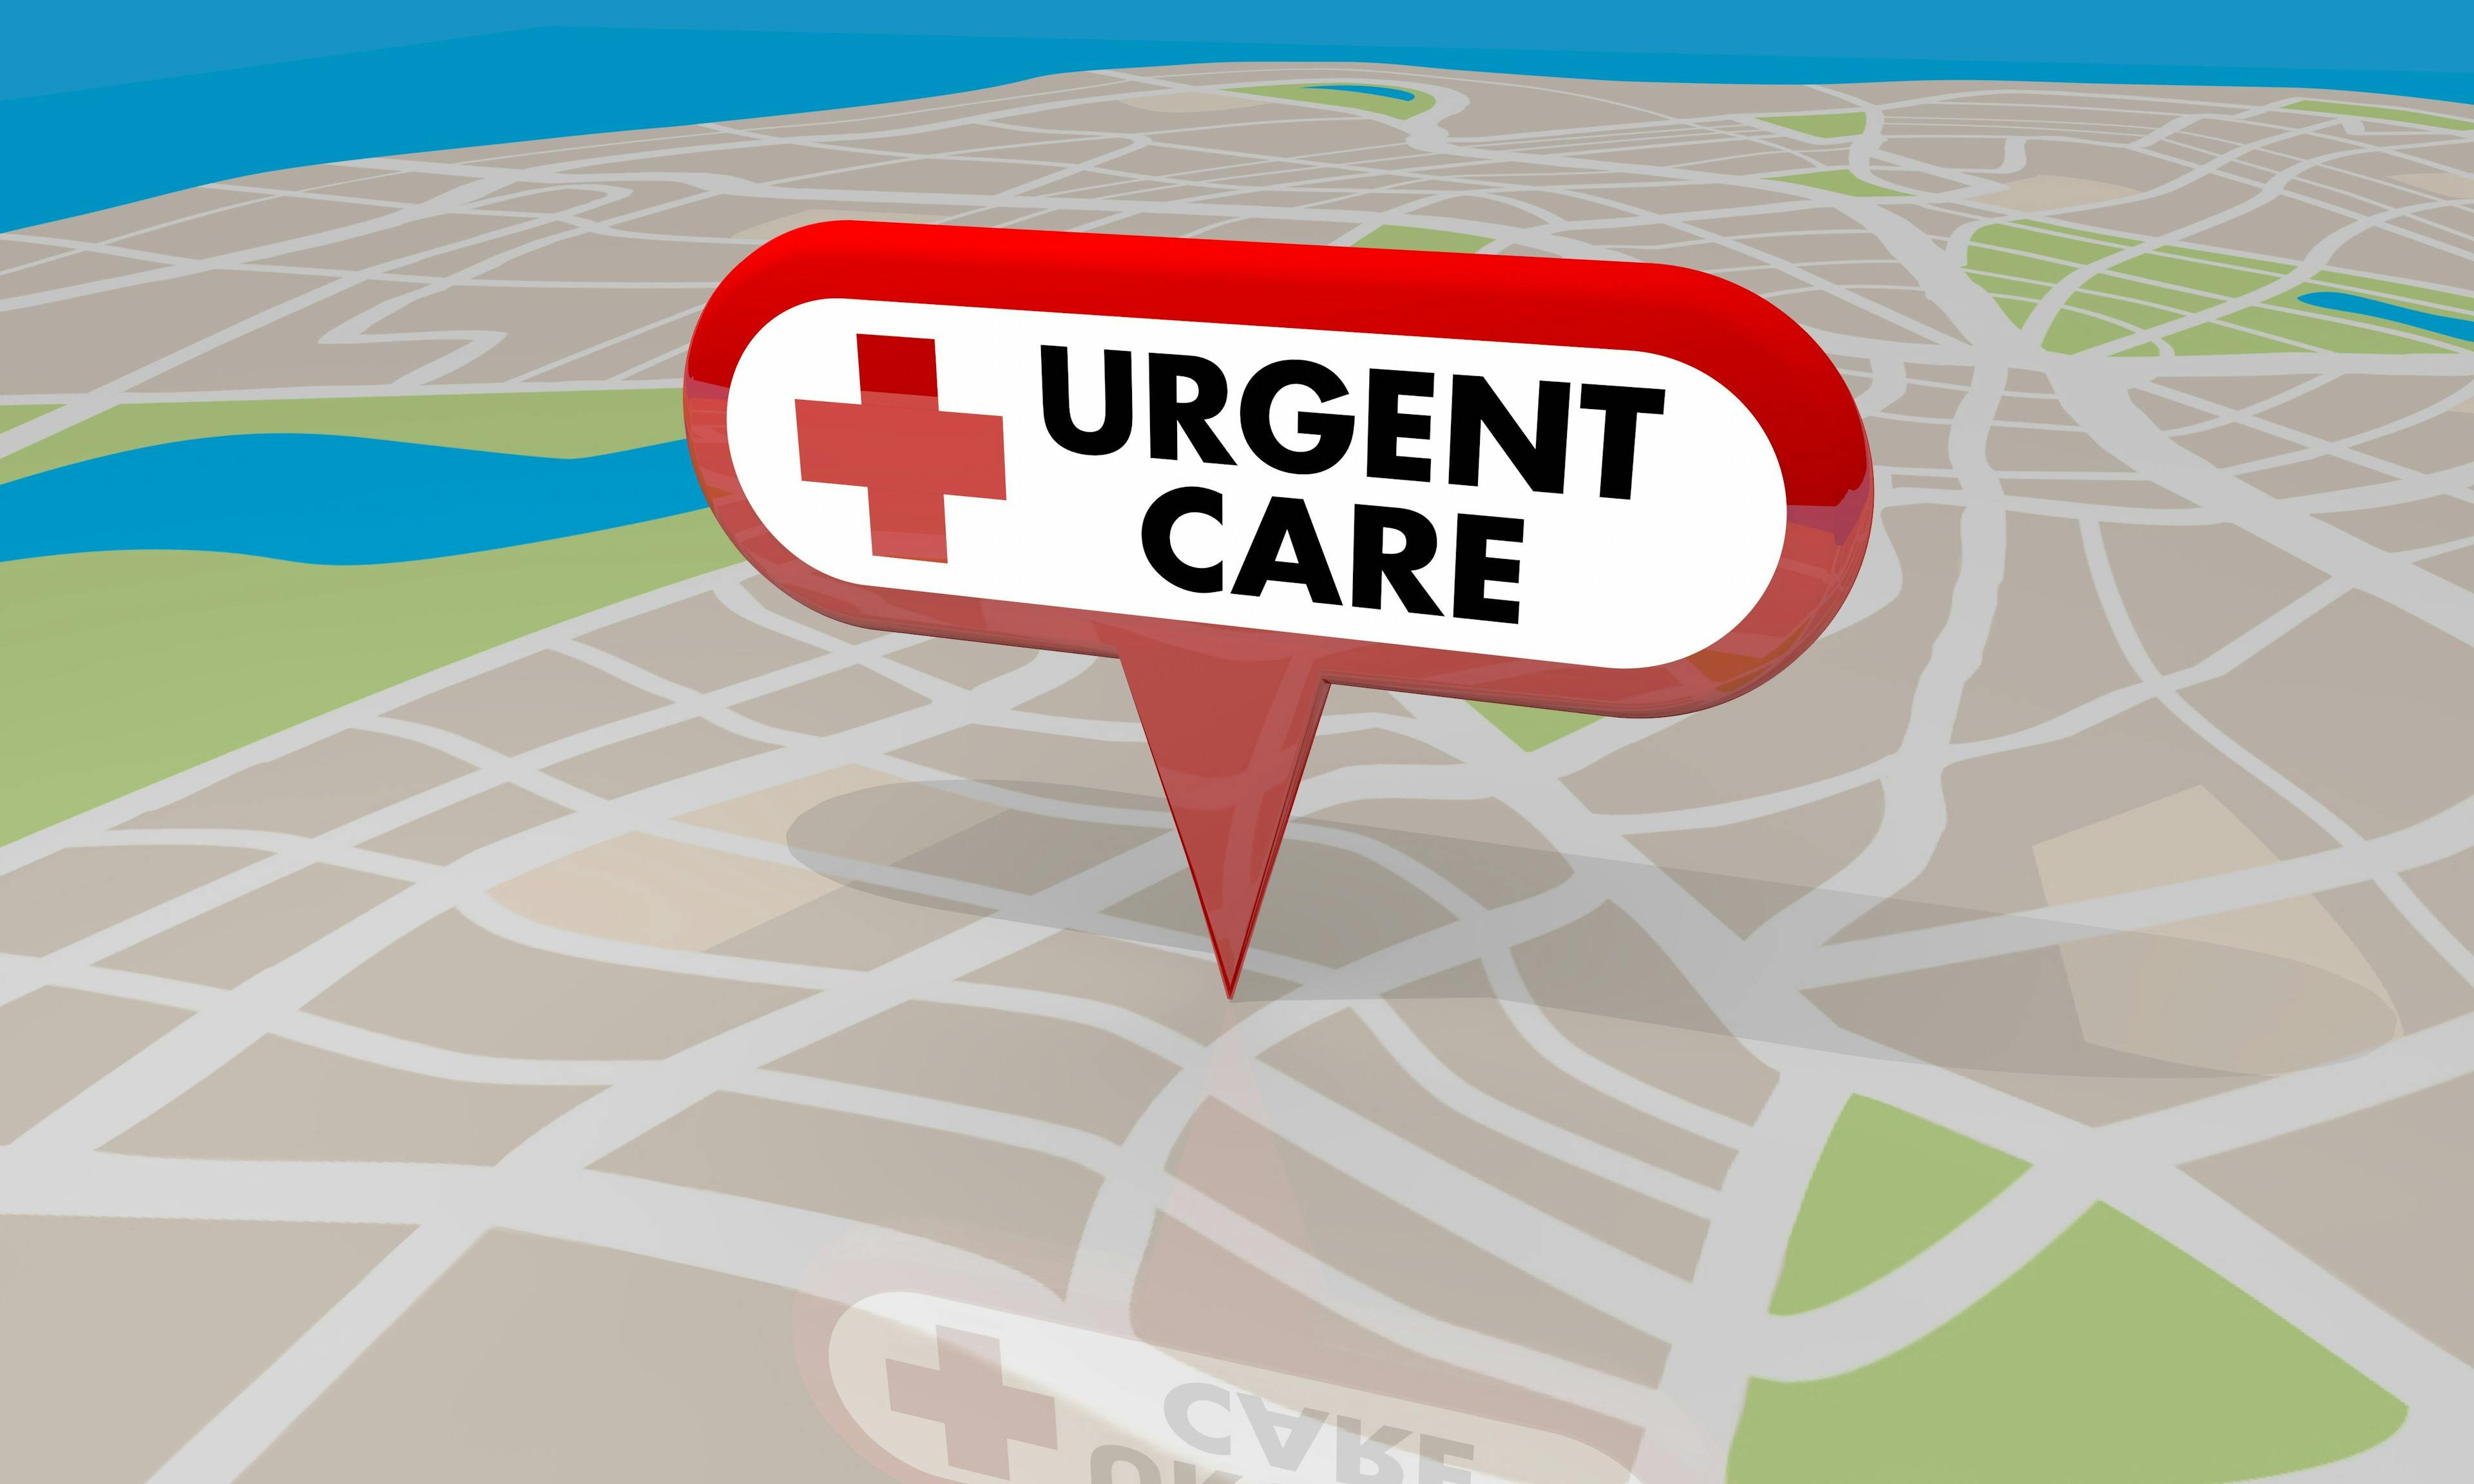 on-demand healthcare, urgent care, patient care